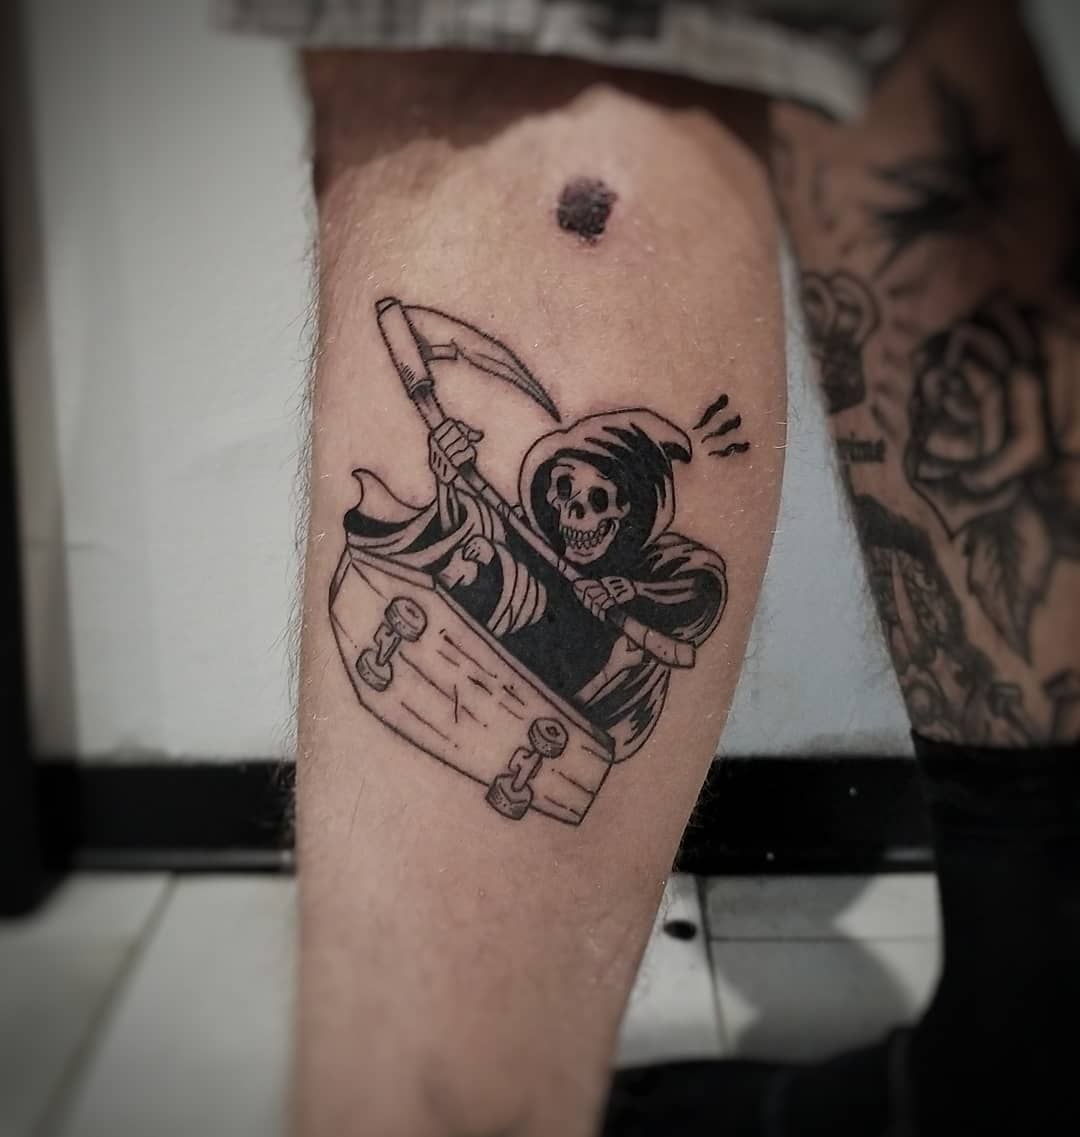 Small skateboard tattoo on the left forearm.